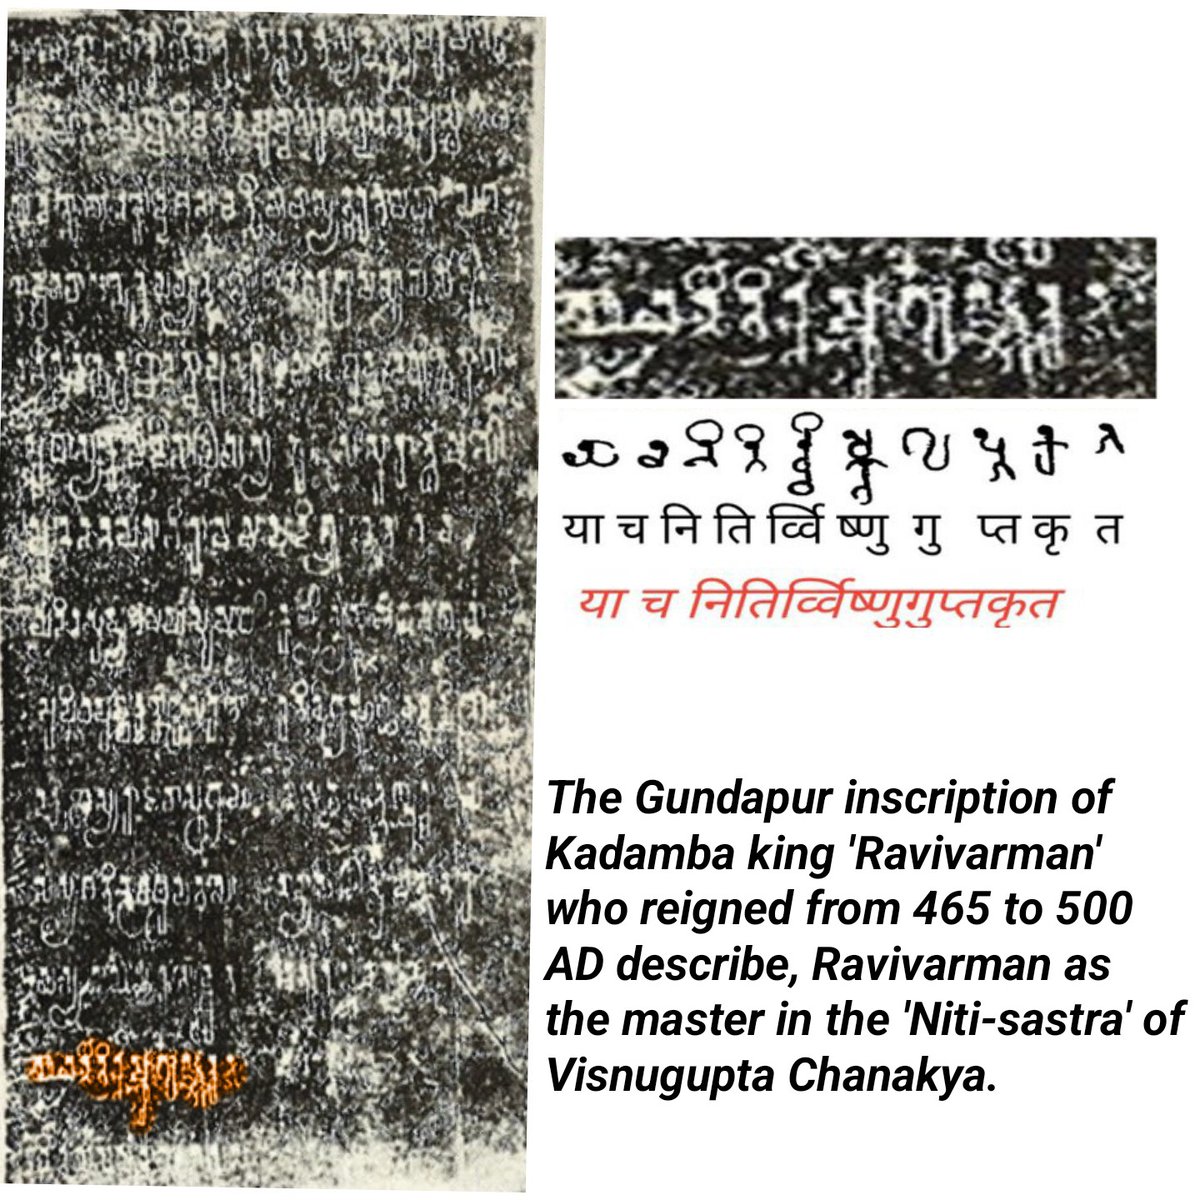 The Gundapur inscription of Kadamba ruler 'Ravivarman' (Reigned 465 to 500 A.D.) is the oldest inscription to mention 'Vishnugupta Chanakya' 

inscription describes Ravivarman as being well versed in the Nitīśāstra of Vishnugupta